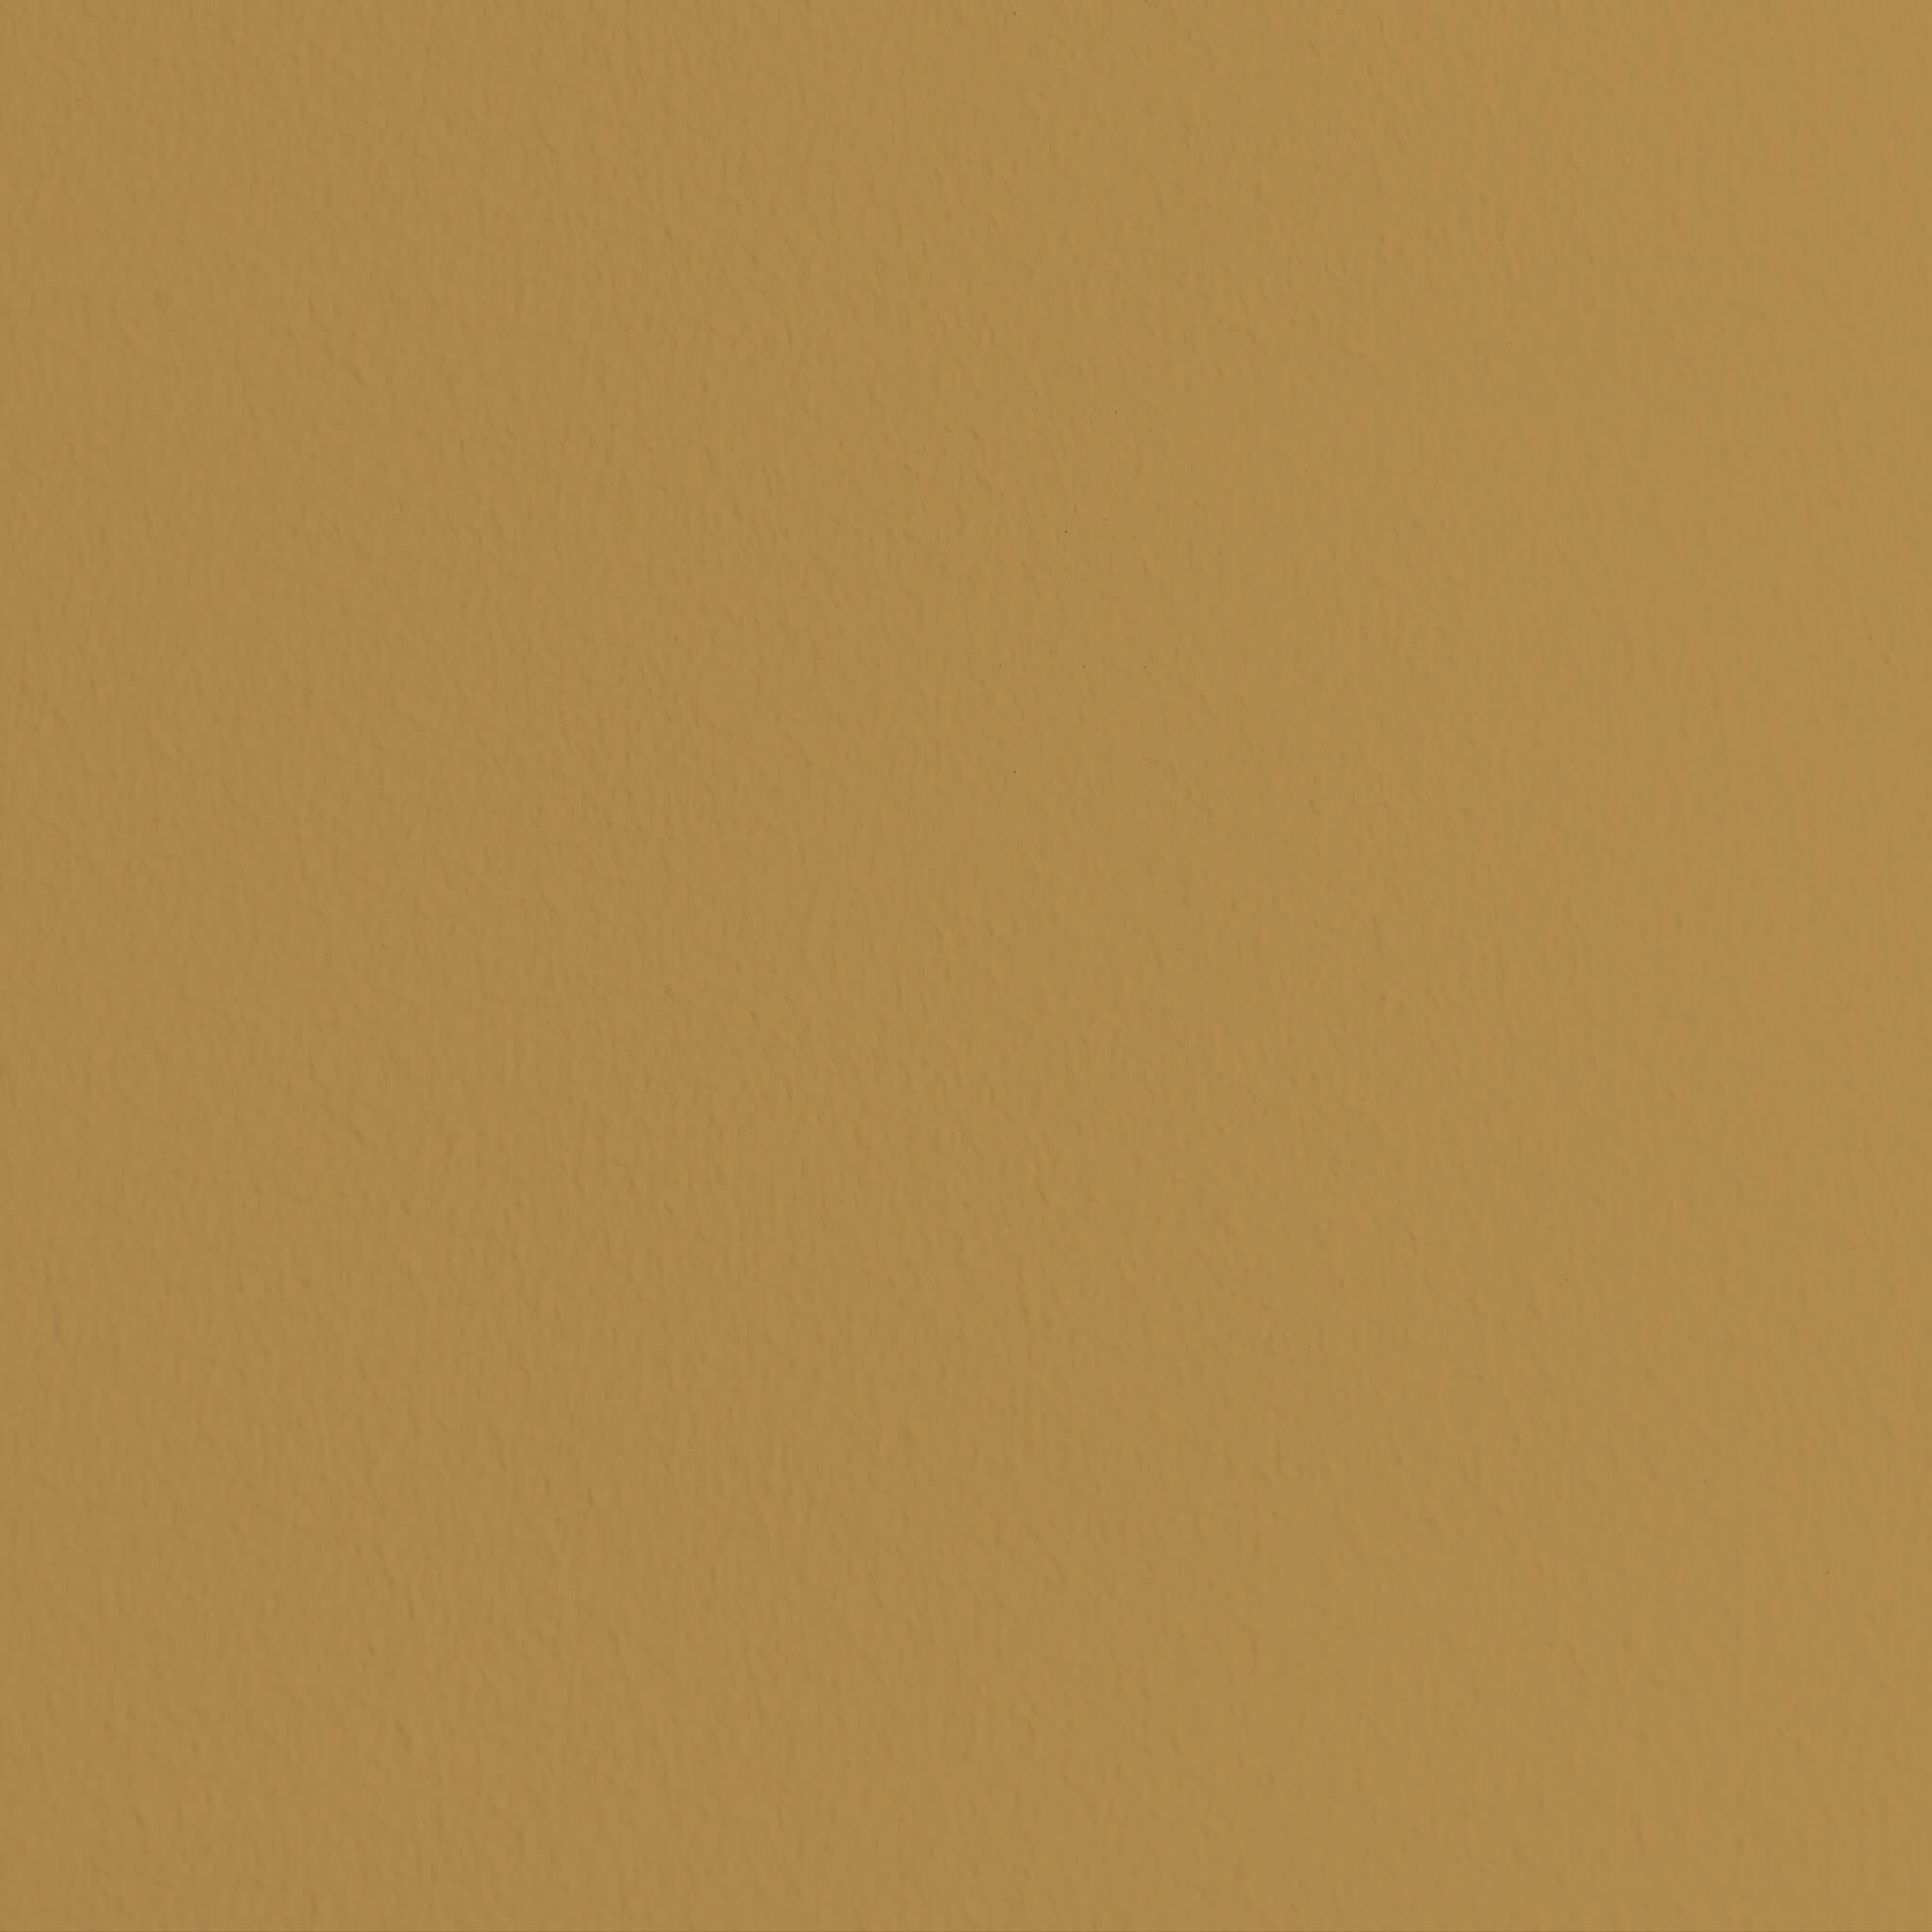 Mylands Freegrove Mustard - Marble Matt Emulsion / Wandfarbe, 5L